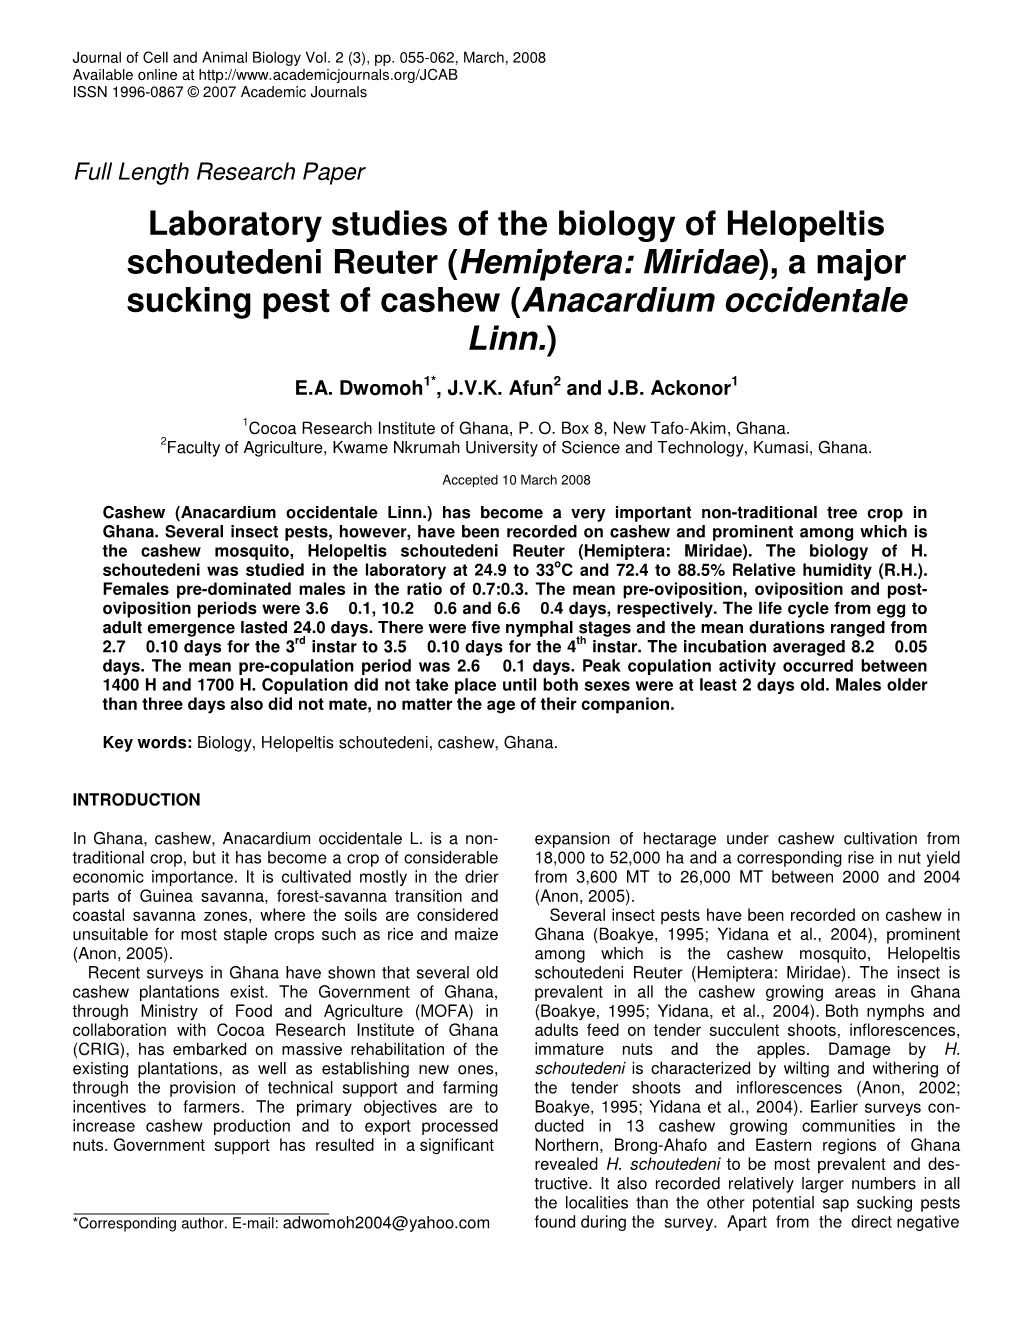 Laboratory Studies of the Biology of Helopeltis Schoutedeni Reuter (Hemiptera: Miridae), a Major Sucking Pest of Cashew (Anacardium Occidentale Linn.)